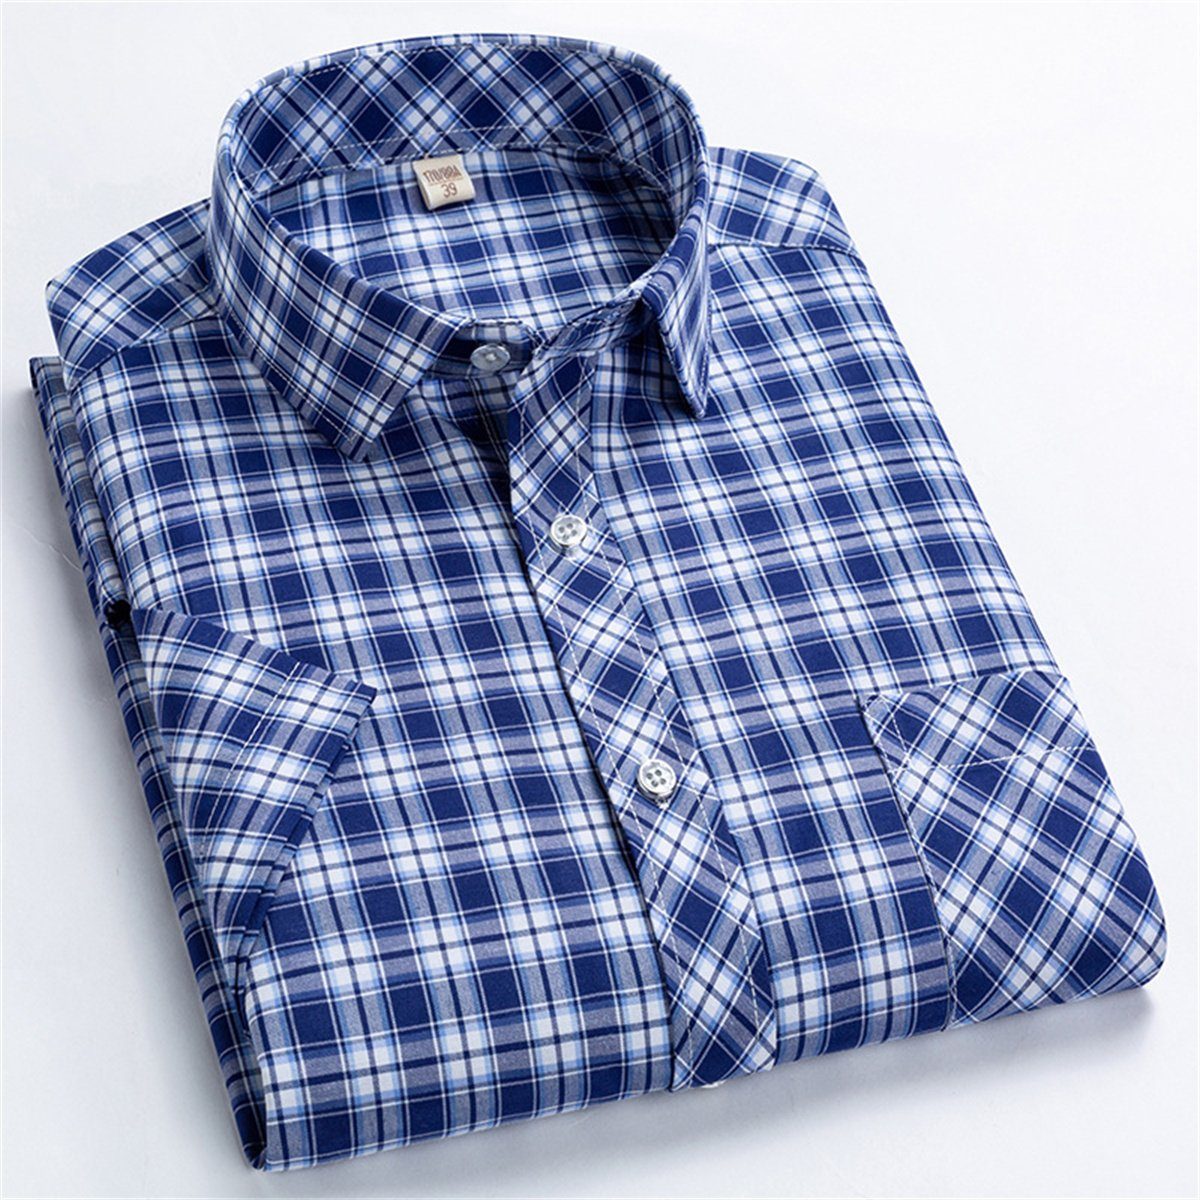 Discaver Trachtenhemd Herrenhemd, reguläre Passform, kurzärmlig, lässiges Popeline-Hemd Blau